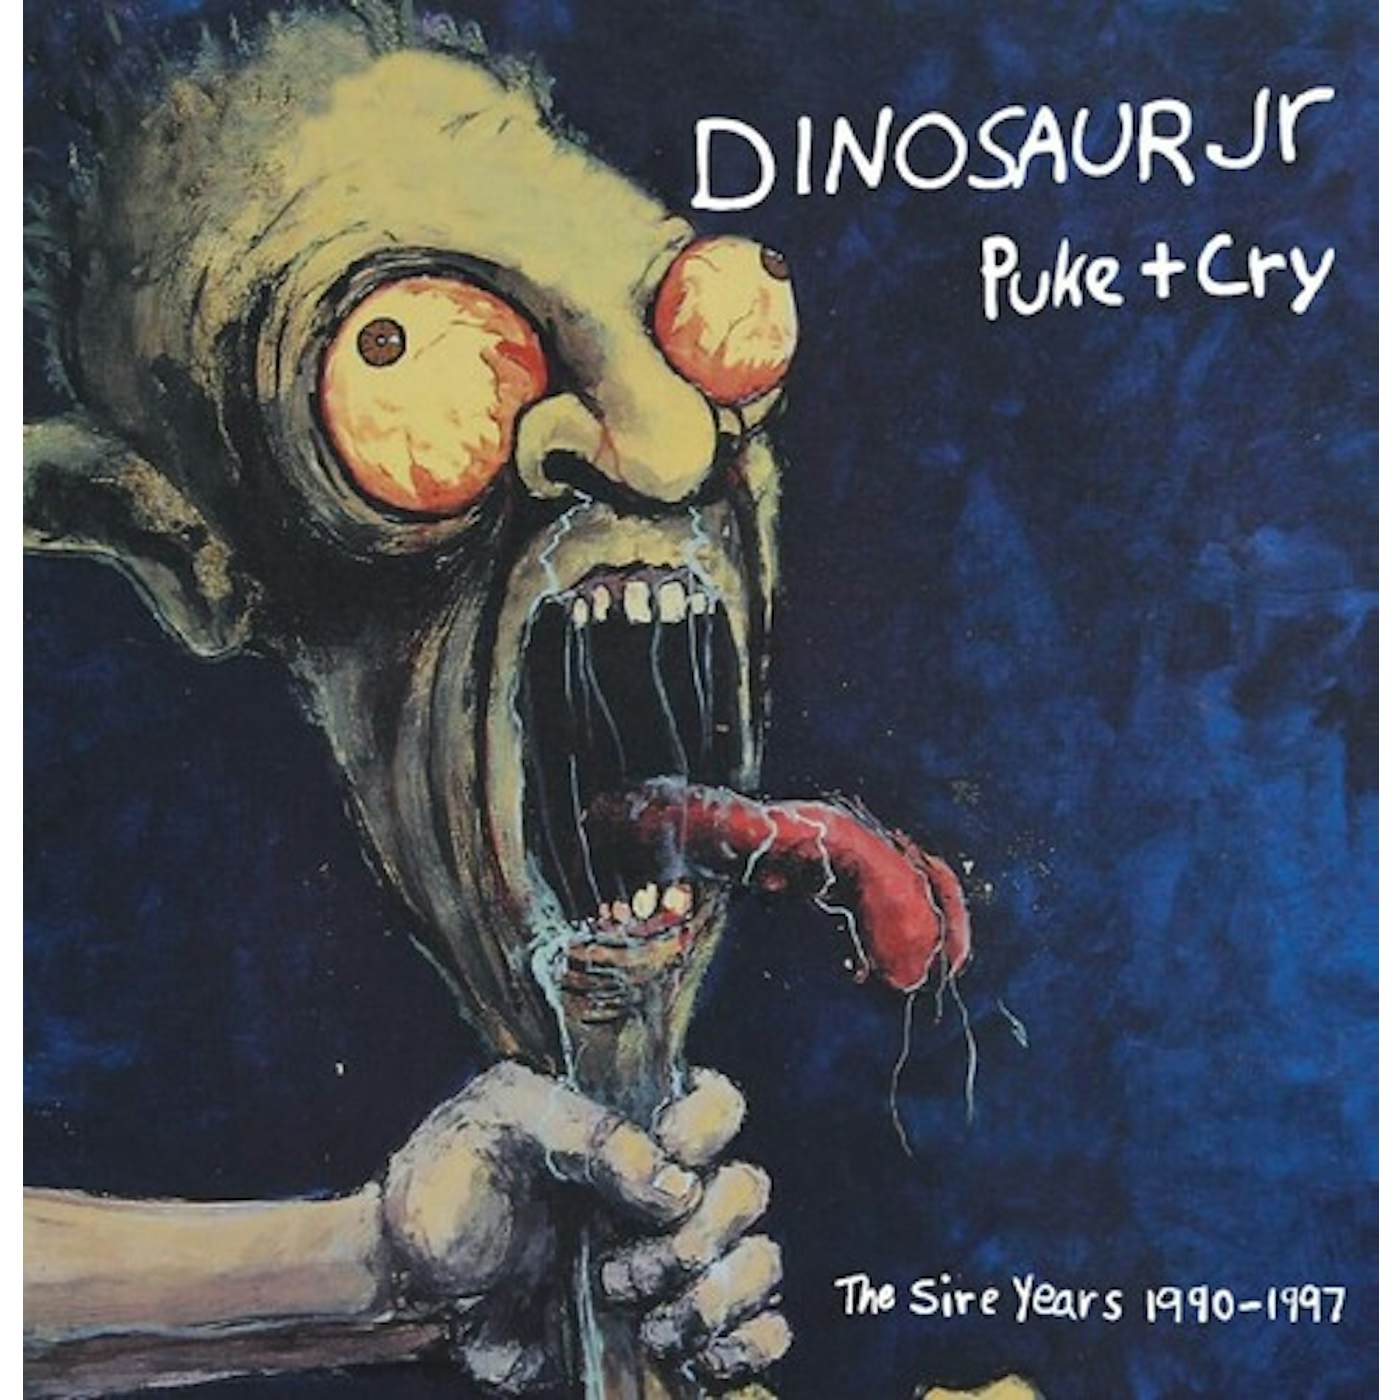 Dinosaur Jr. PUKE + CRY: THE SIRE YEARS 1990-1997 CD